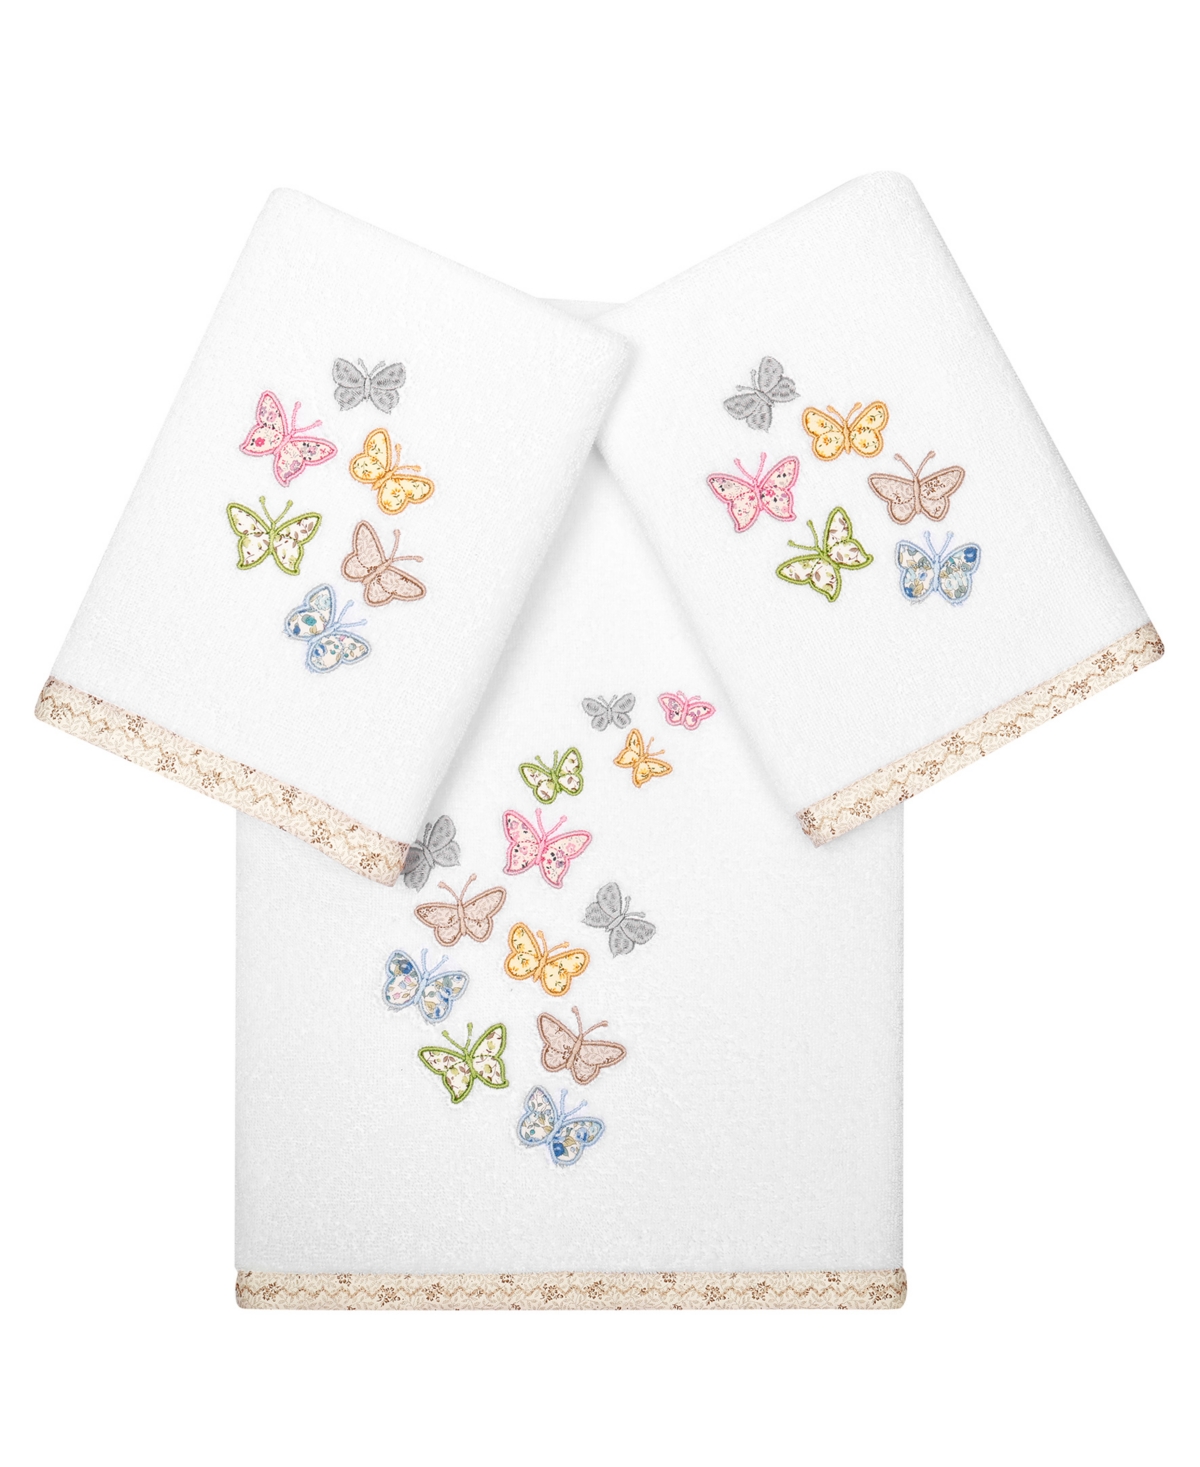 Linum Home Textiles Turkish Cotton Mariposa Embellished Towel Set, 3 Piece Bedding In White